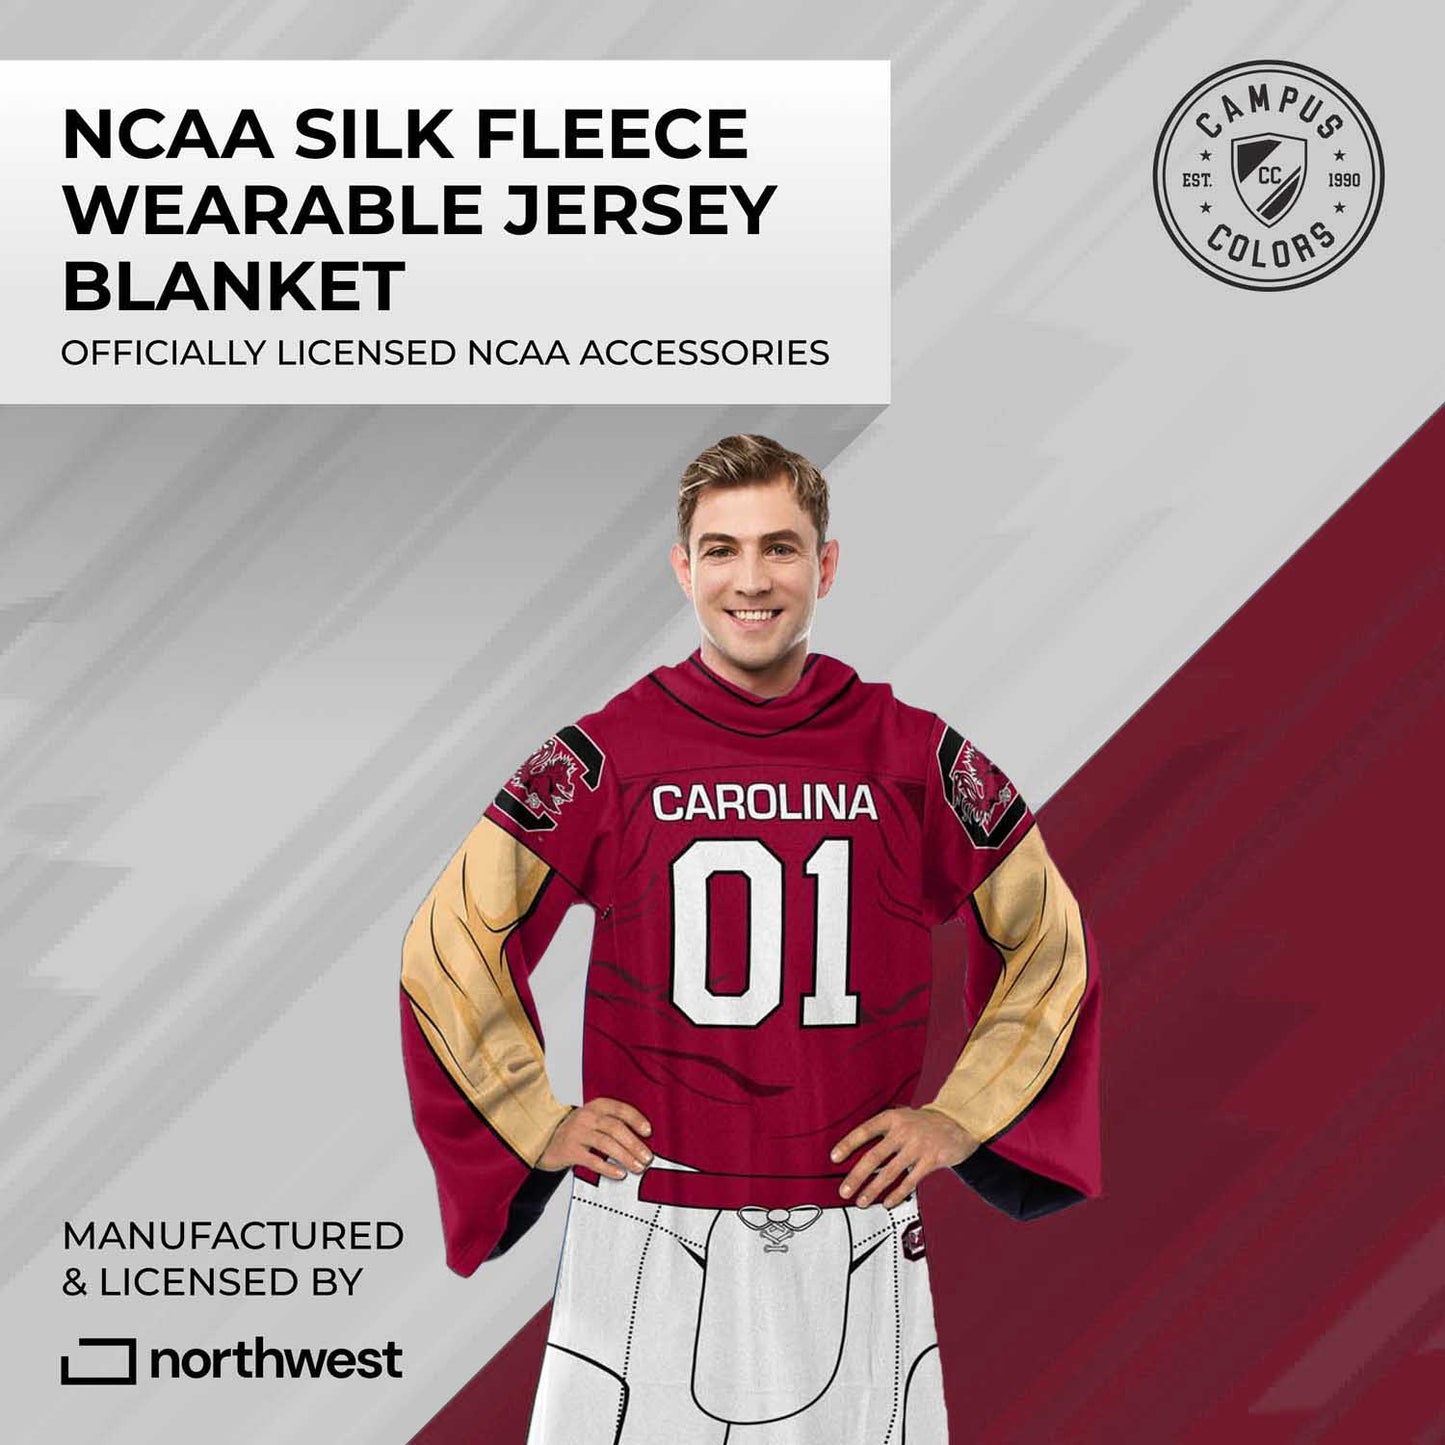 South Carolina Gamecocks NCAA Team Wearable Blanket with Sleeves - Maroon